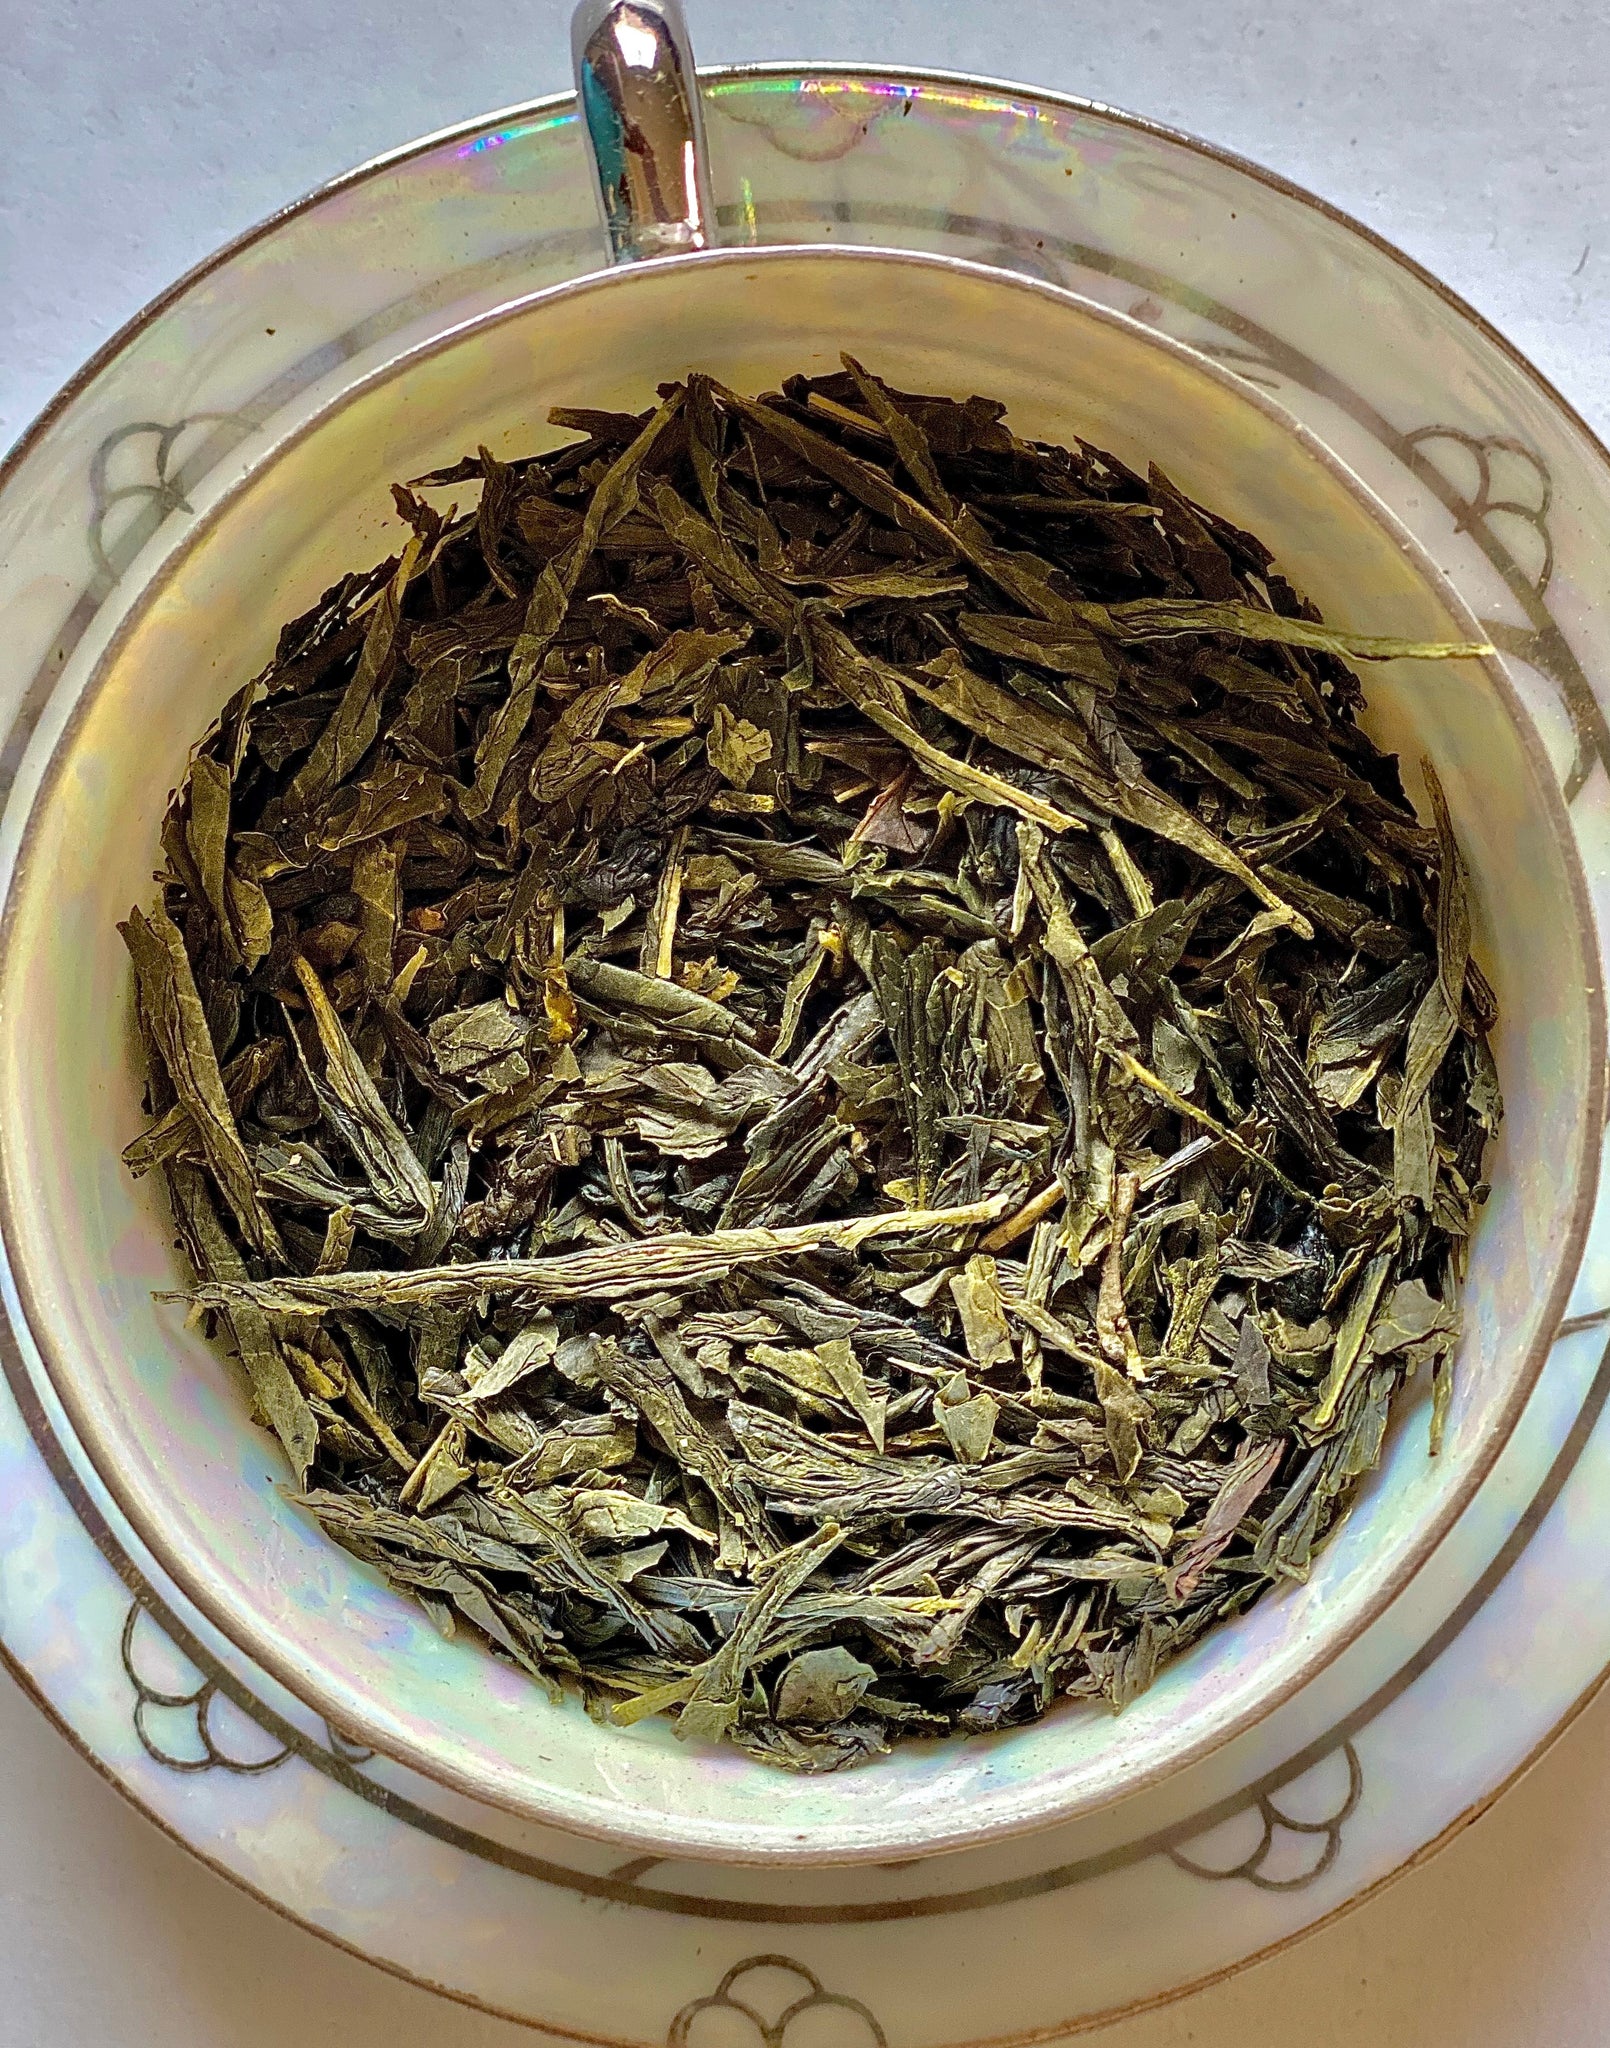 Dragonwell Tea